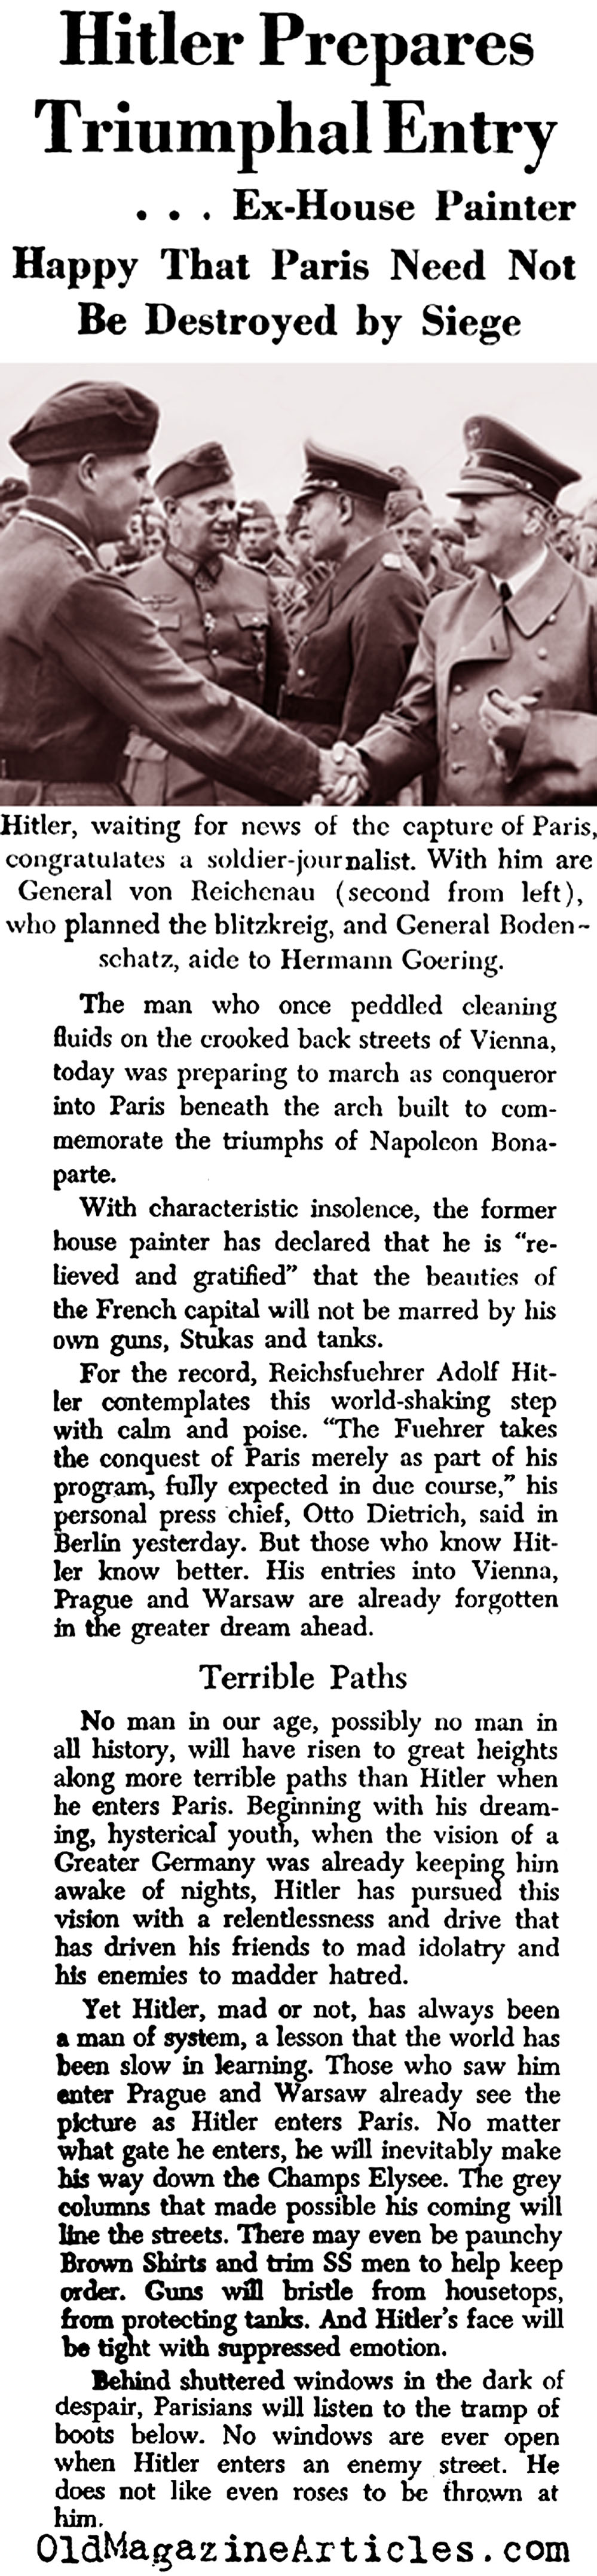 Hitler Prepares to Visit Paris (PM Tabloid, 1940)